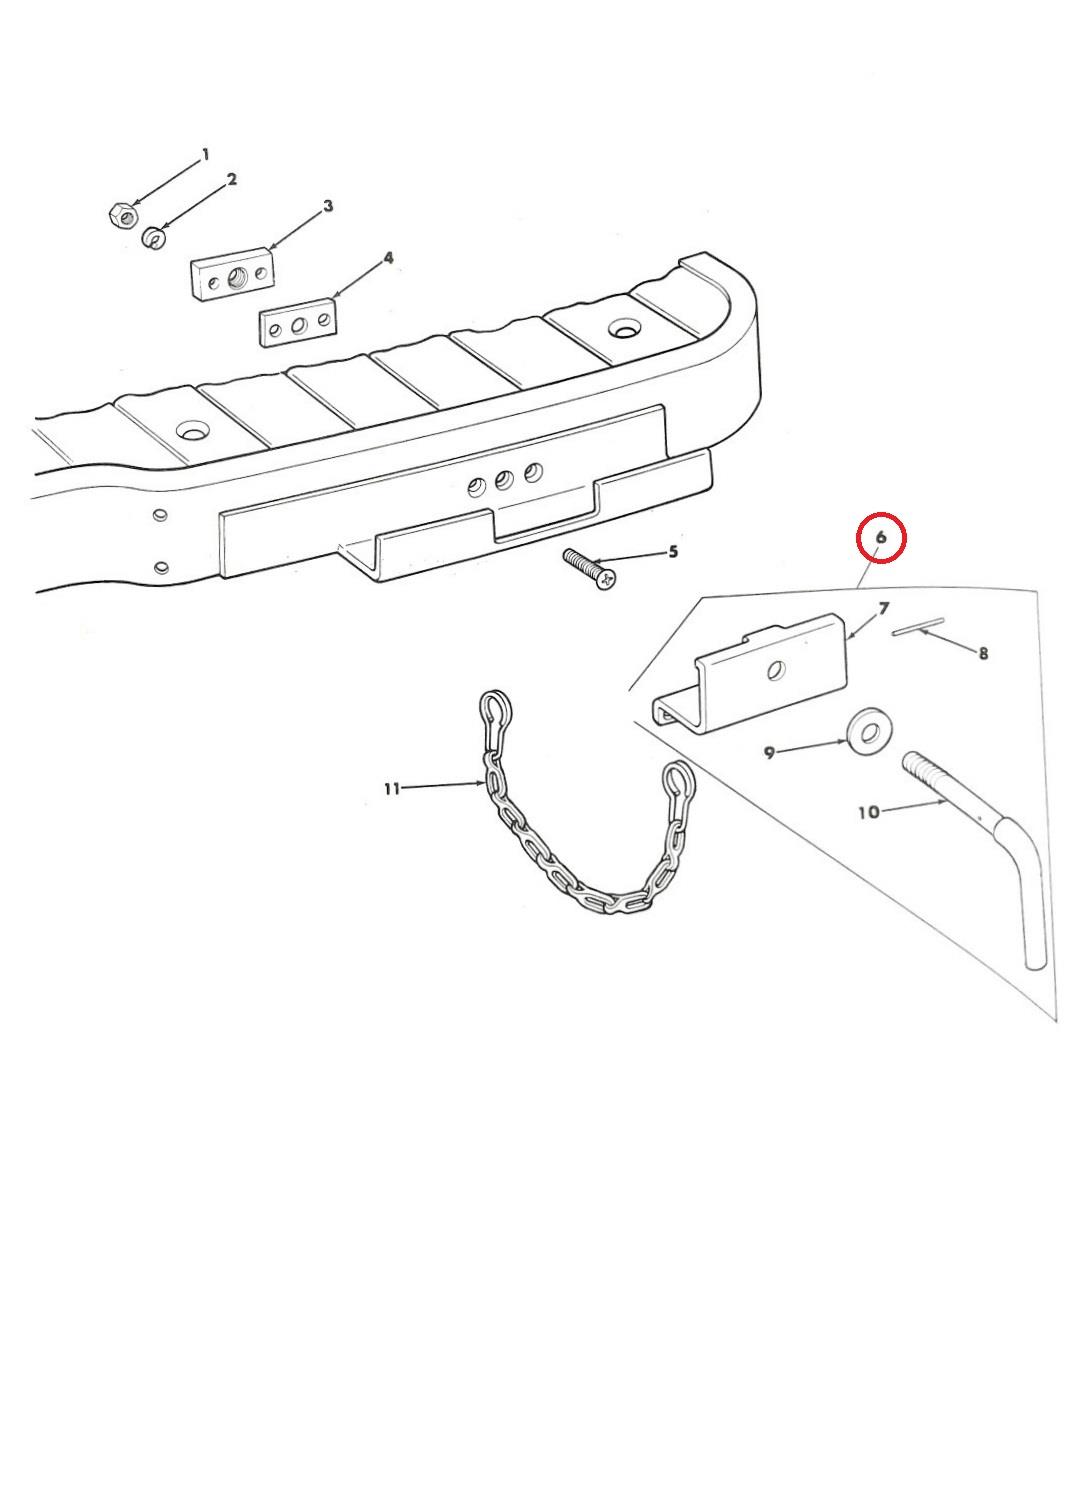 MU-184 | MU-184 Footrest Support Assembly Mule M274 Parts Diagram (Large).JPG